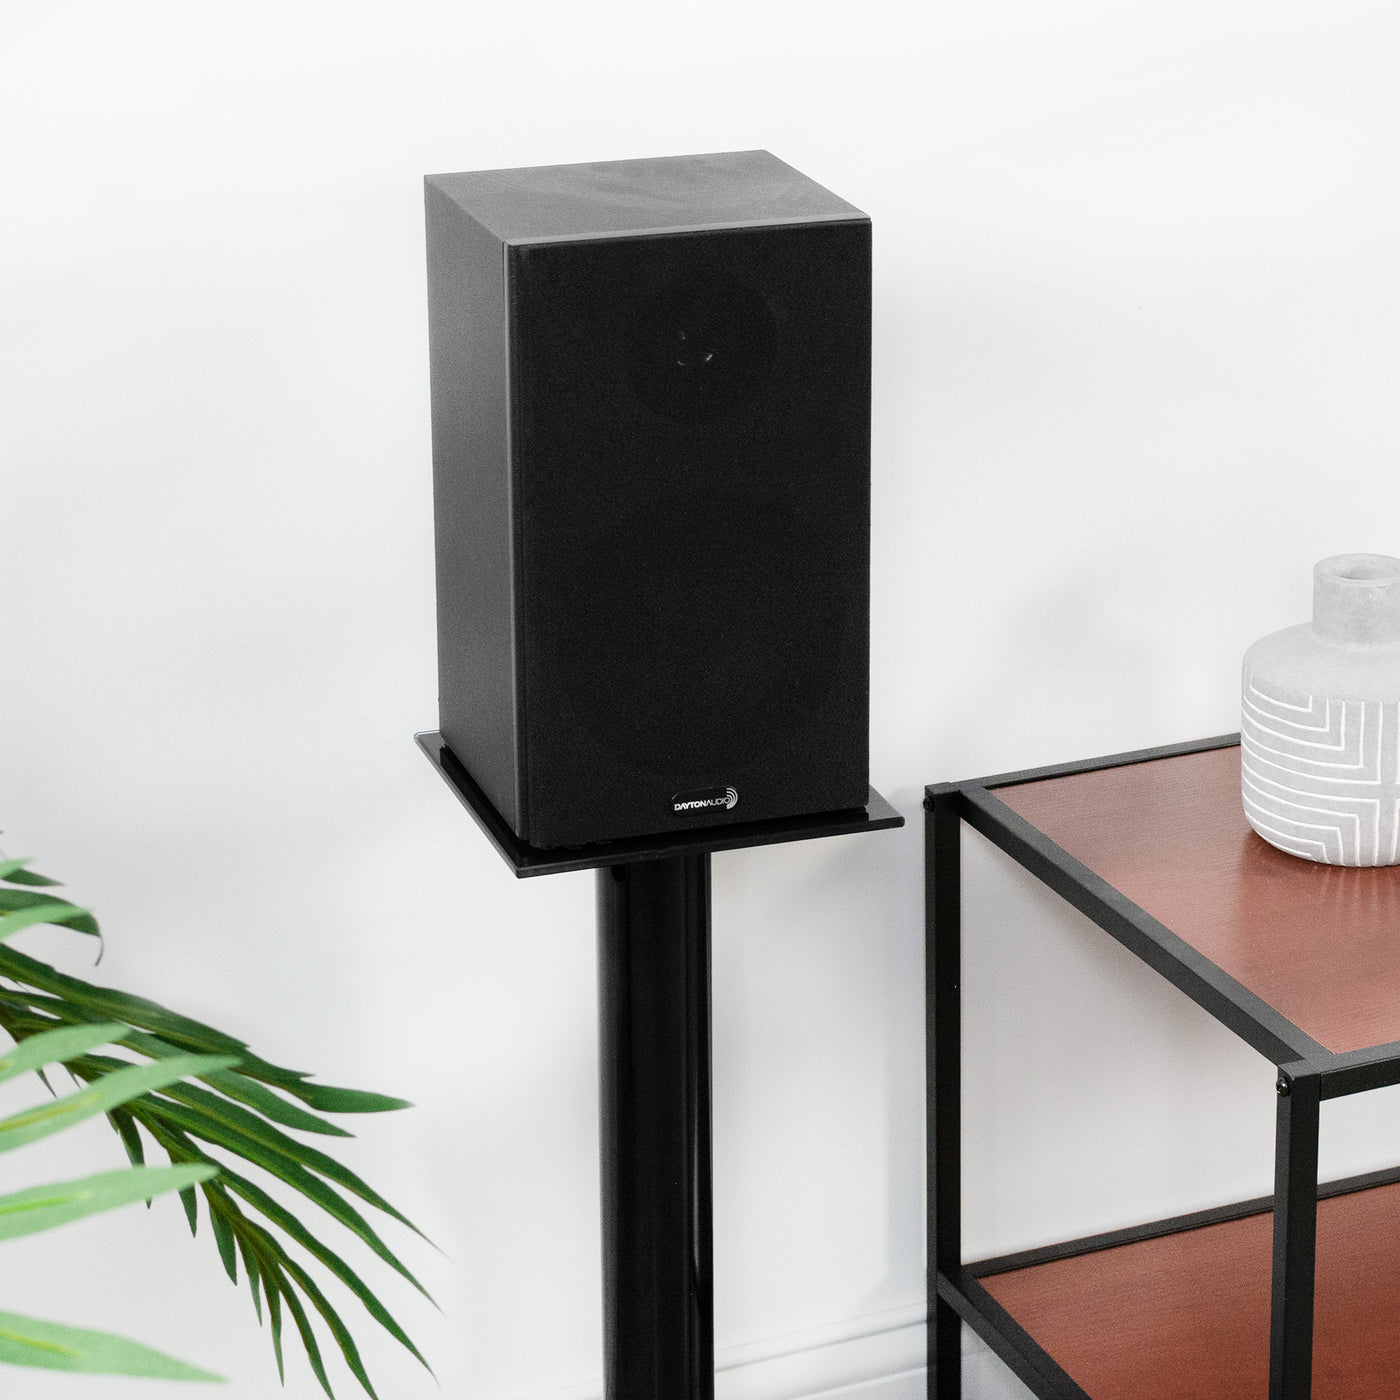 Heavy-duty speaker stands for surround sound speakers.